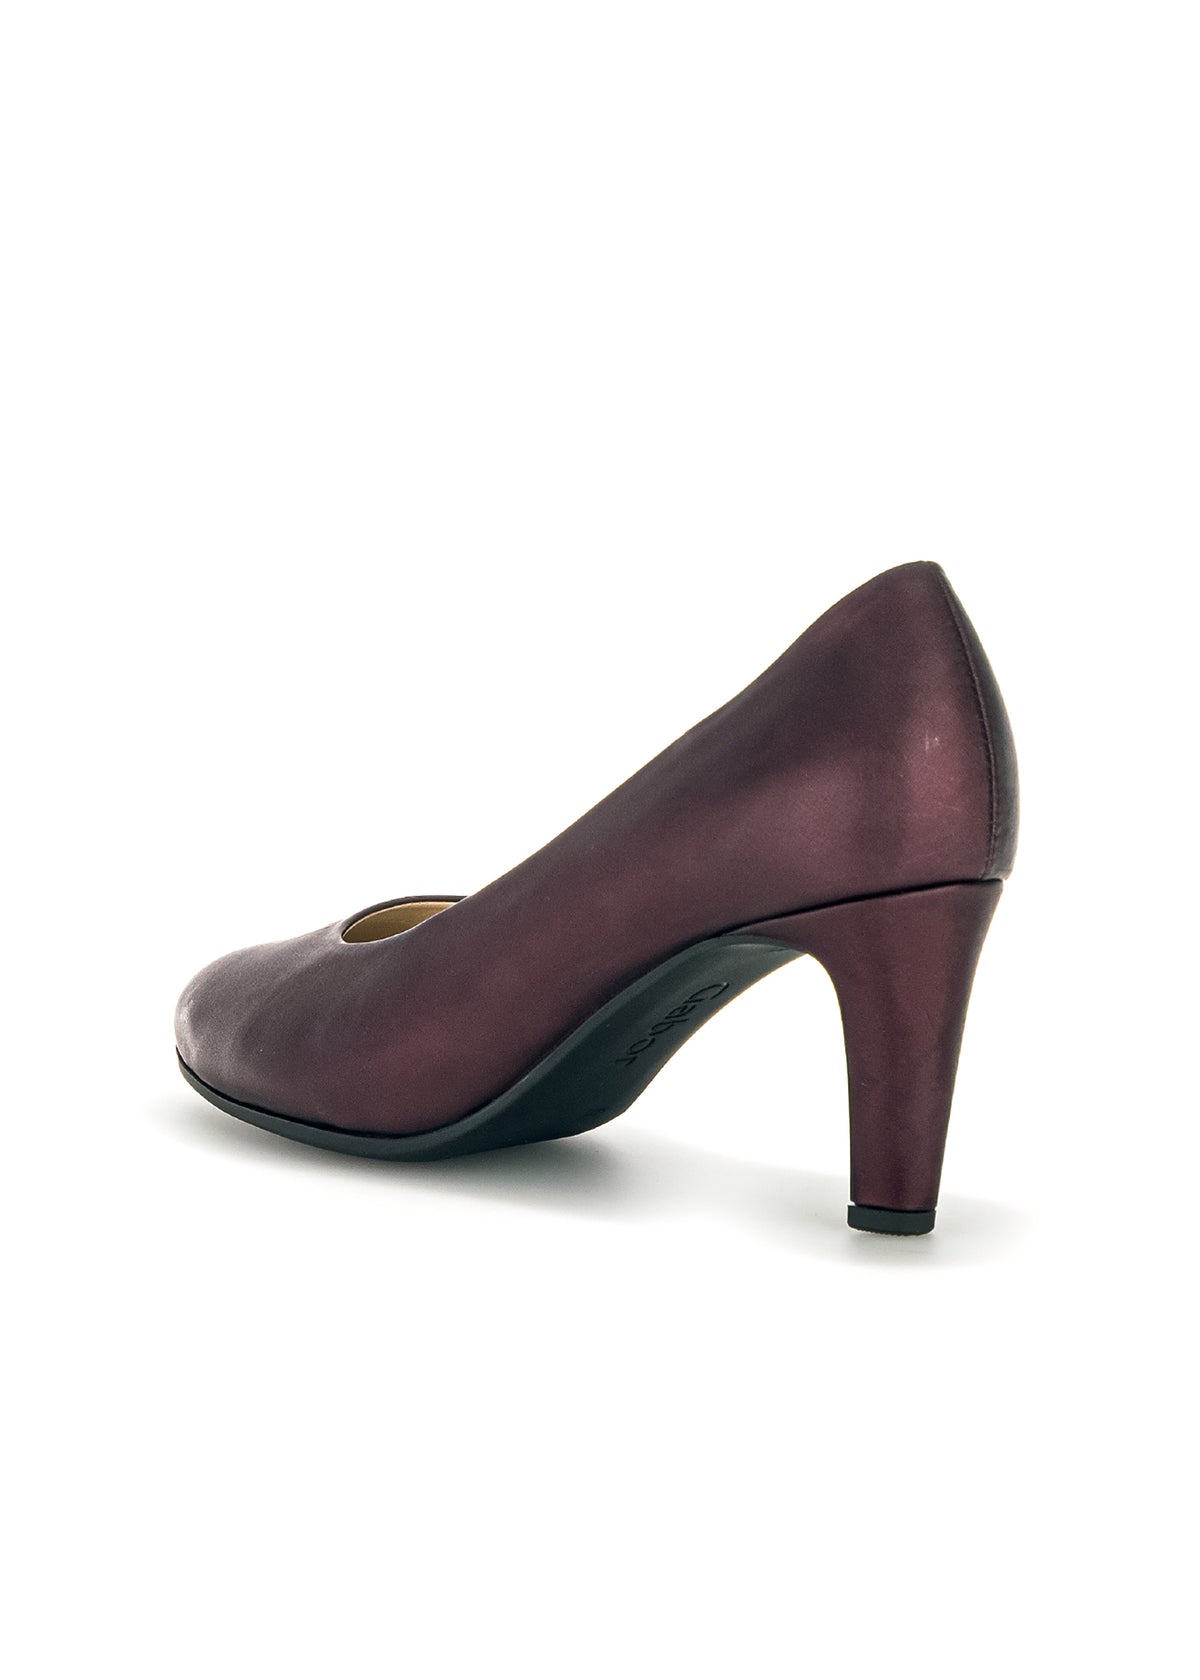 High heels - dark plum